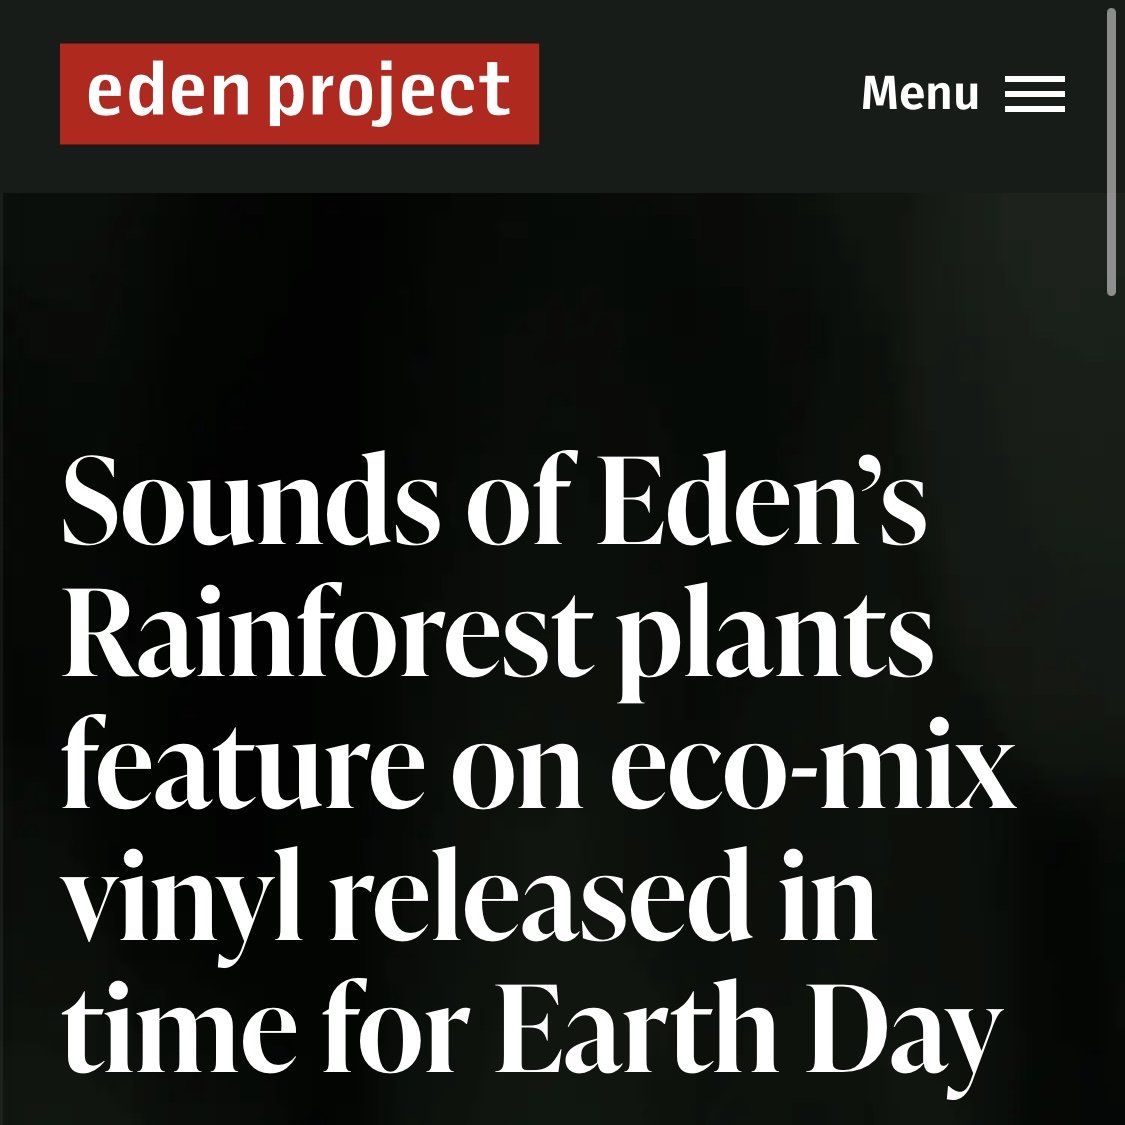 Eden Project press release